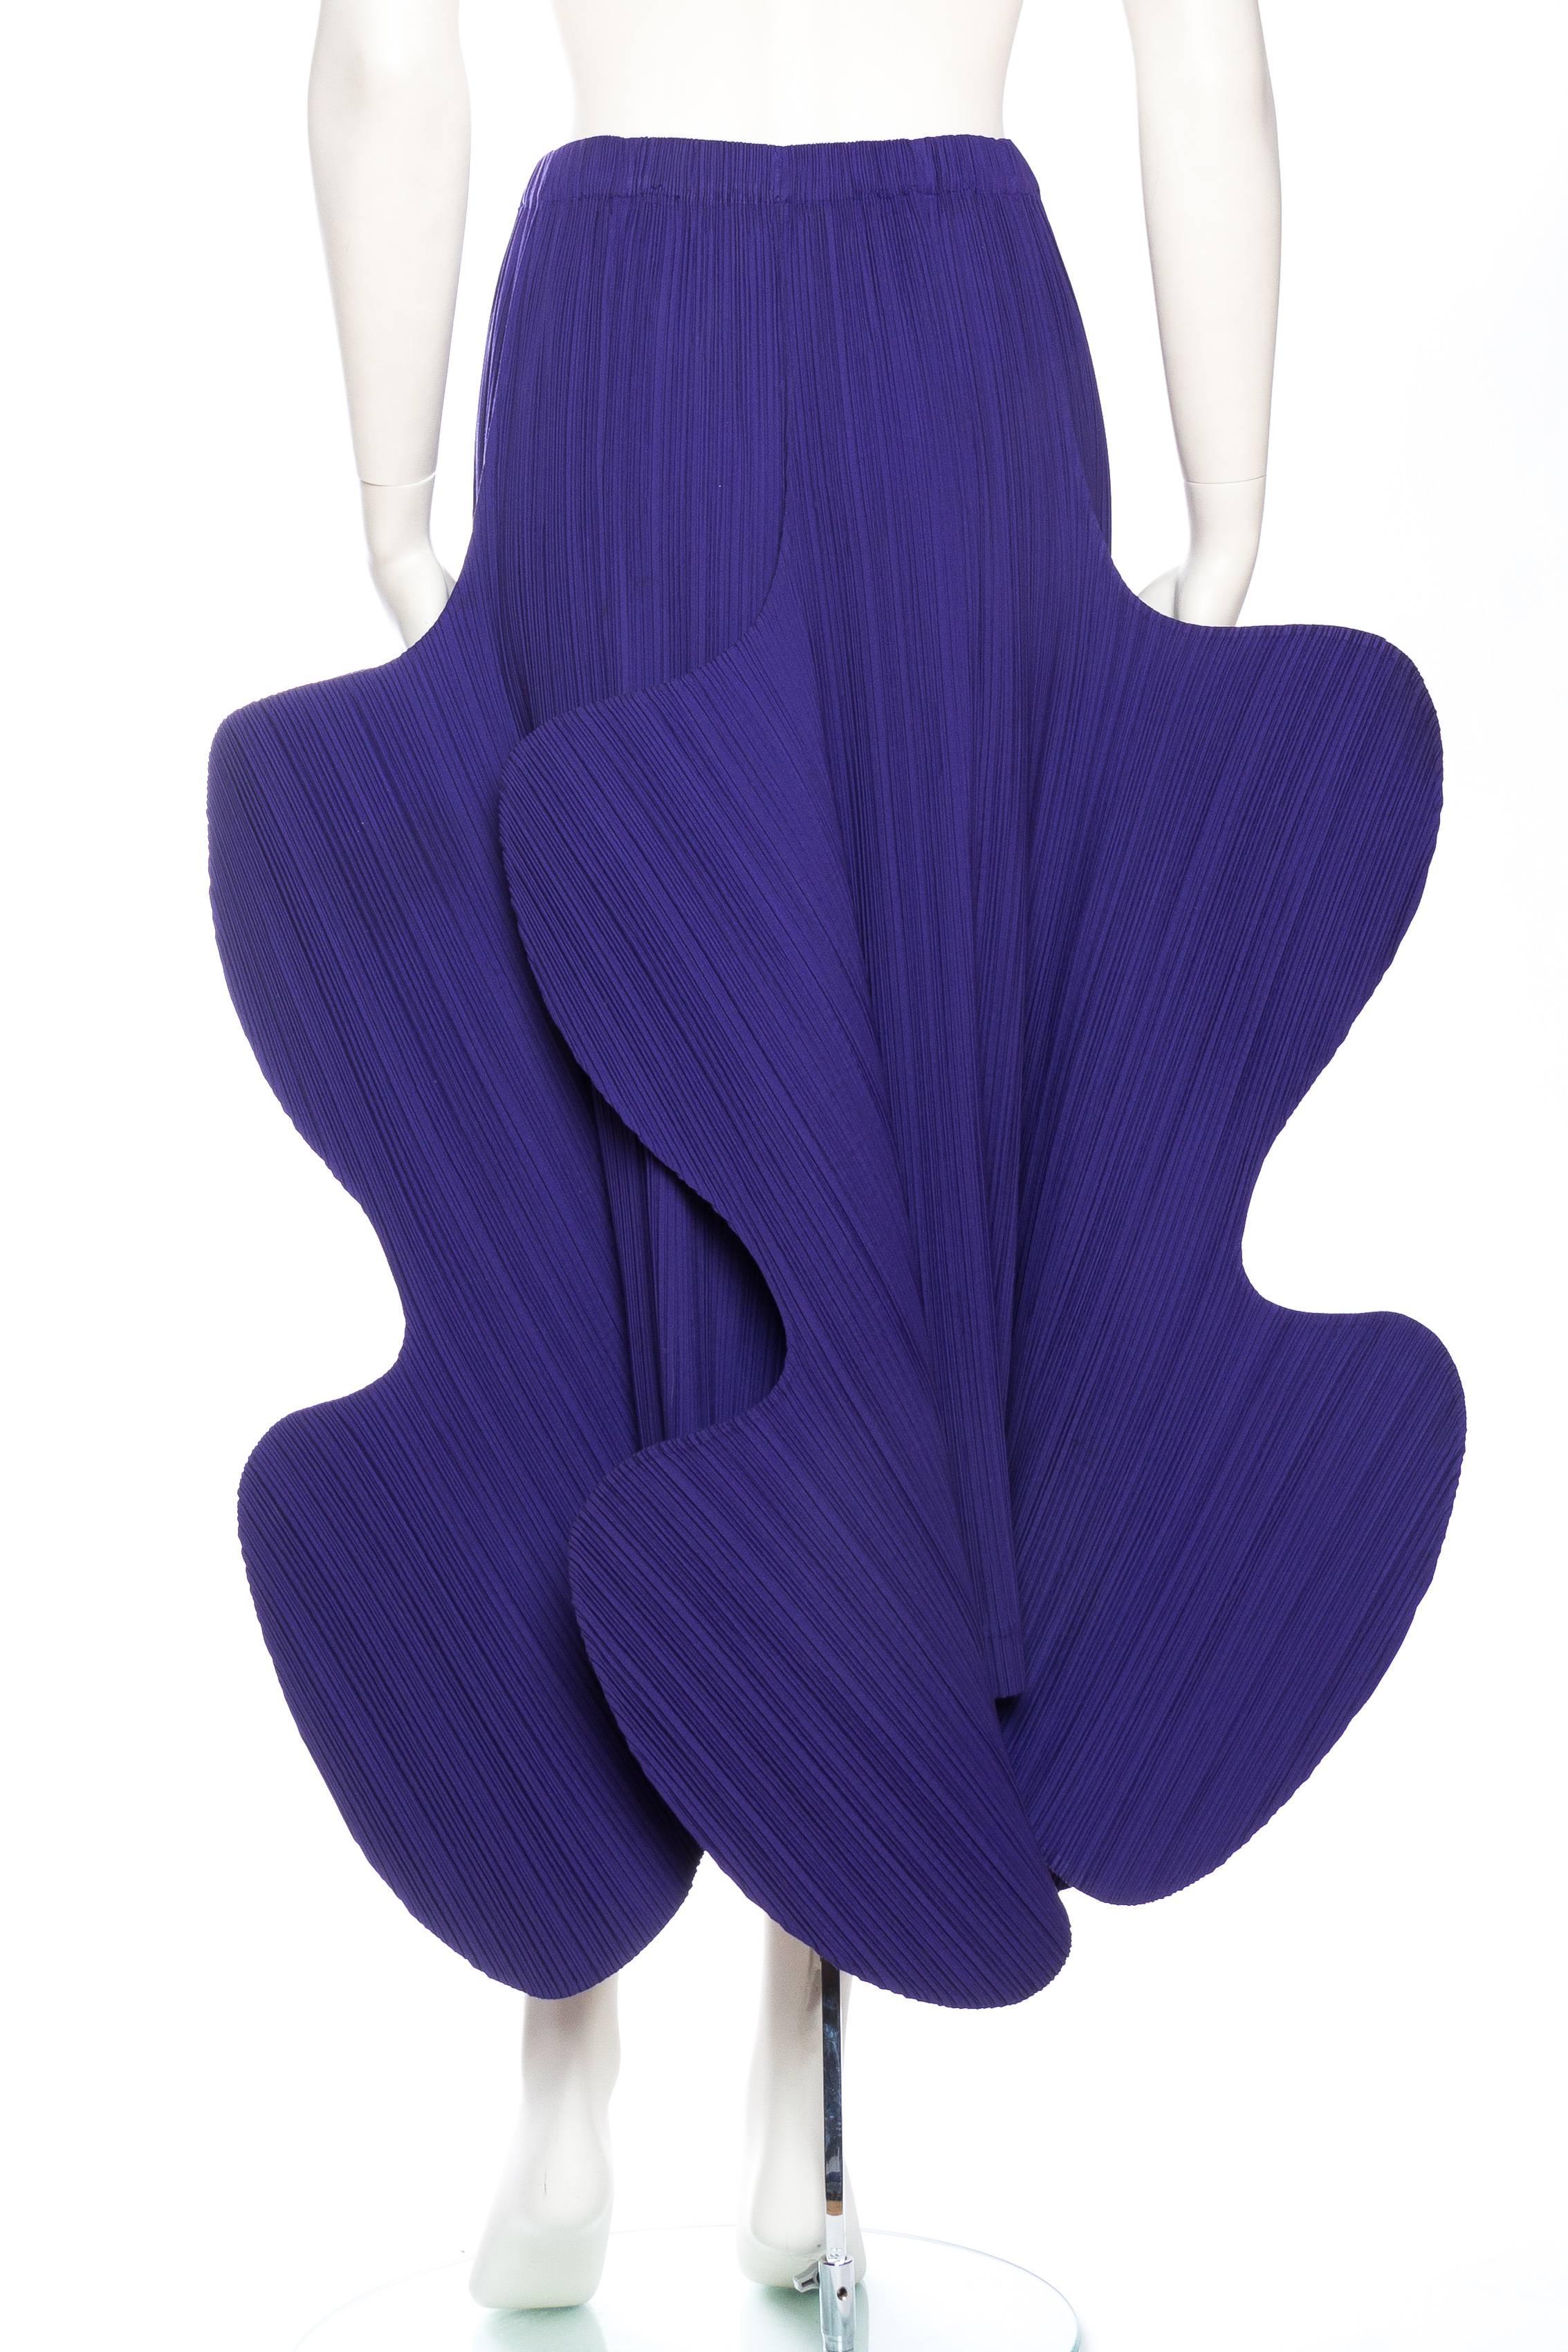 Issey Miyake Sculptural Pleated Skirt 2